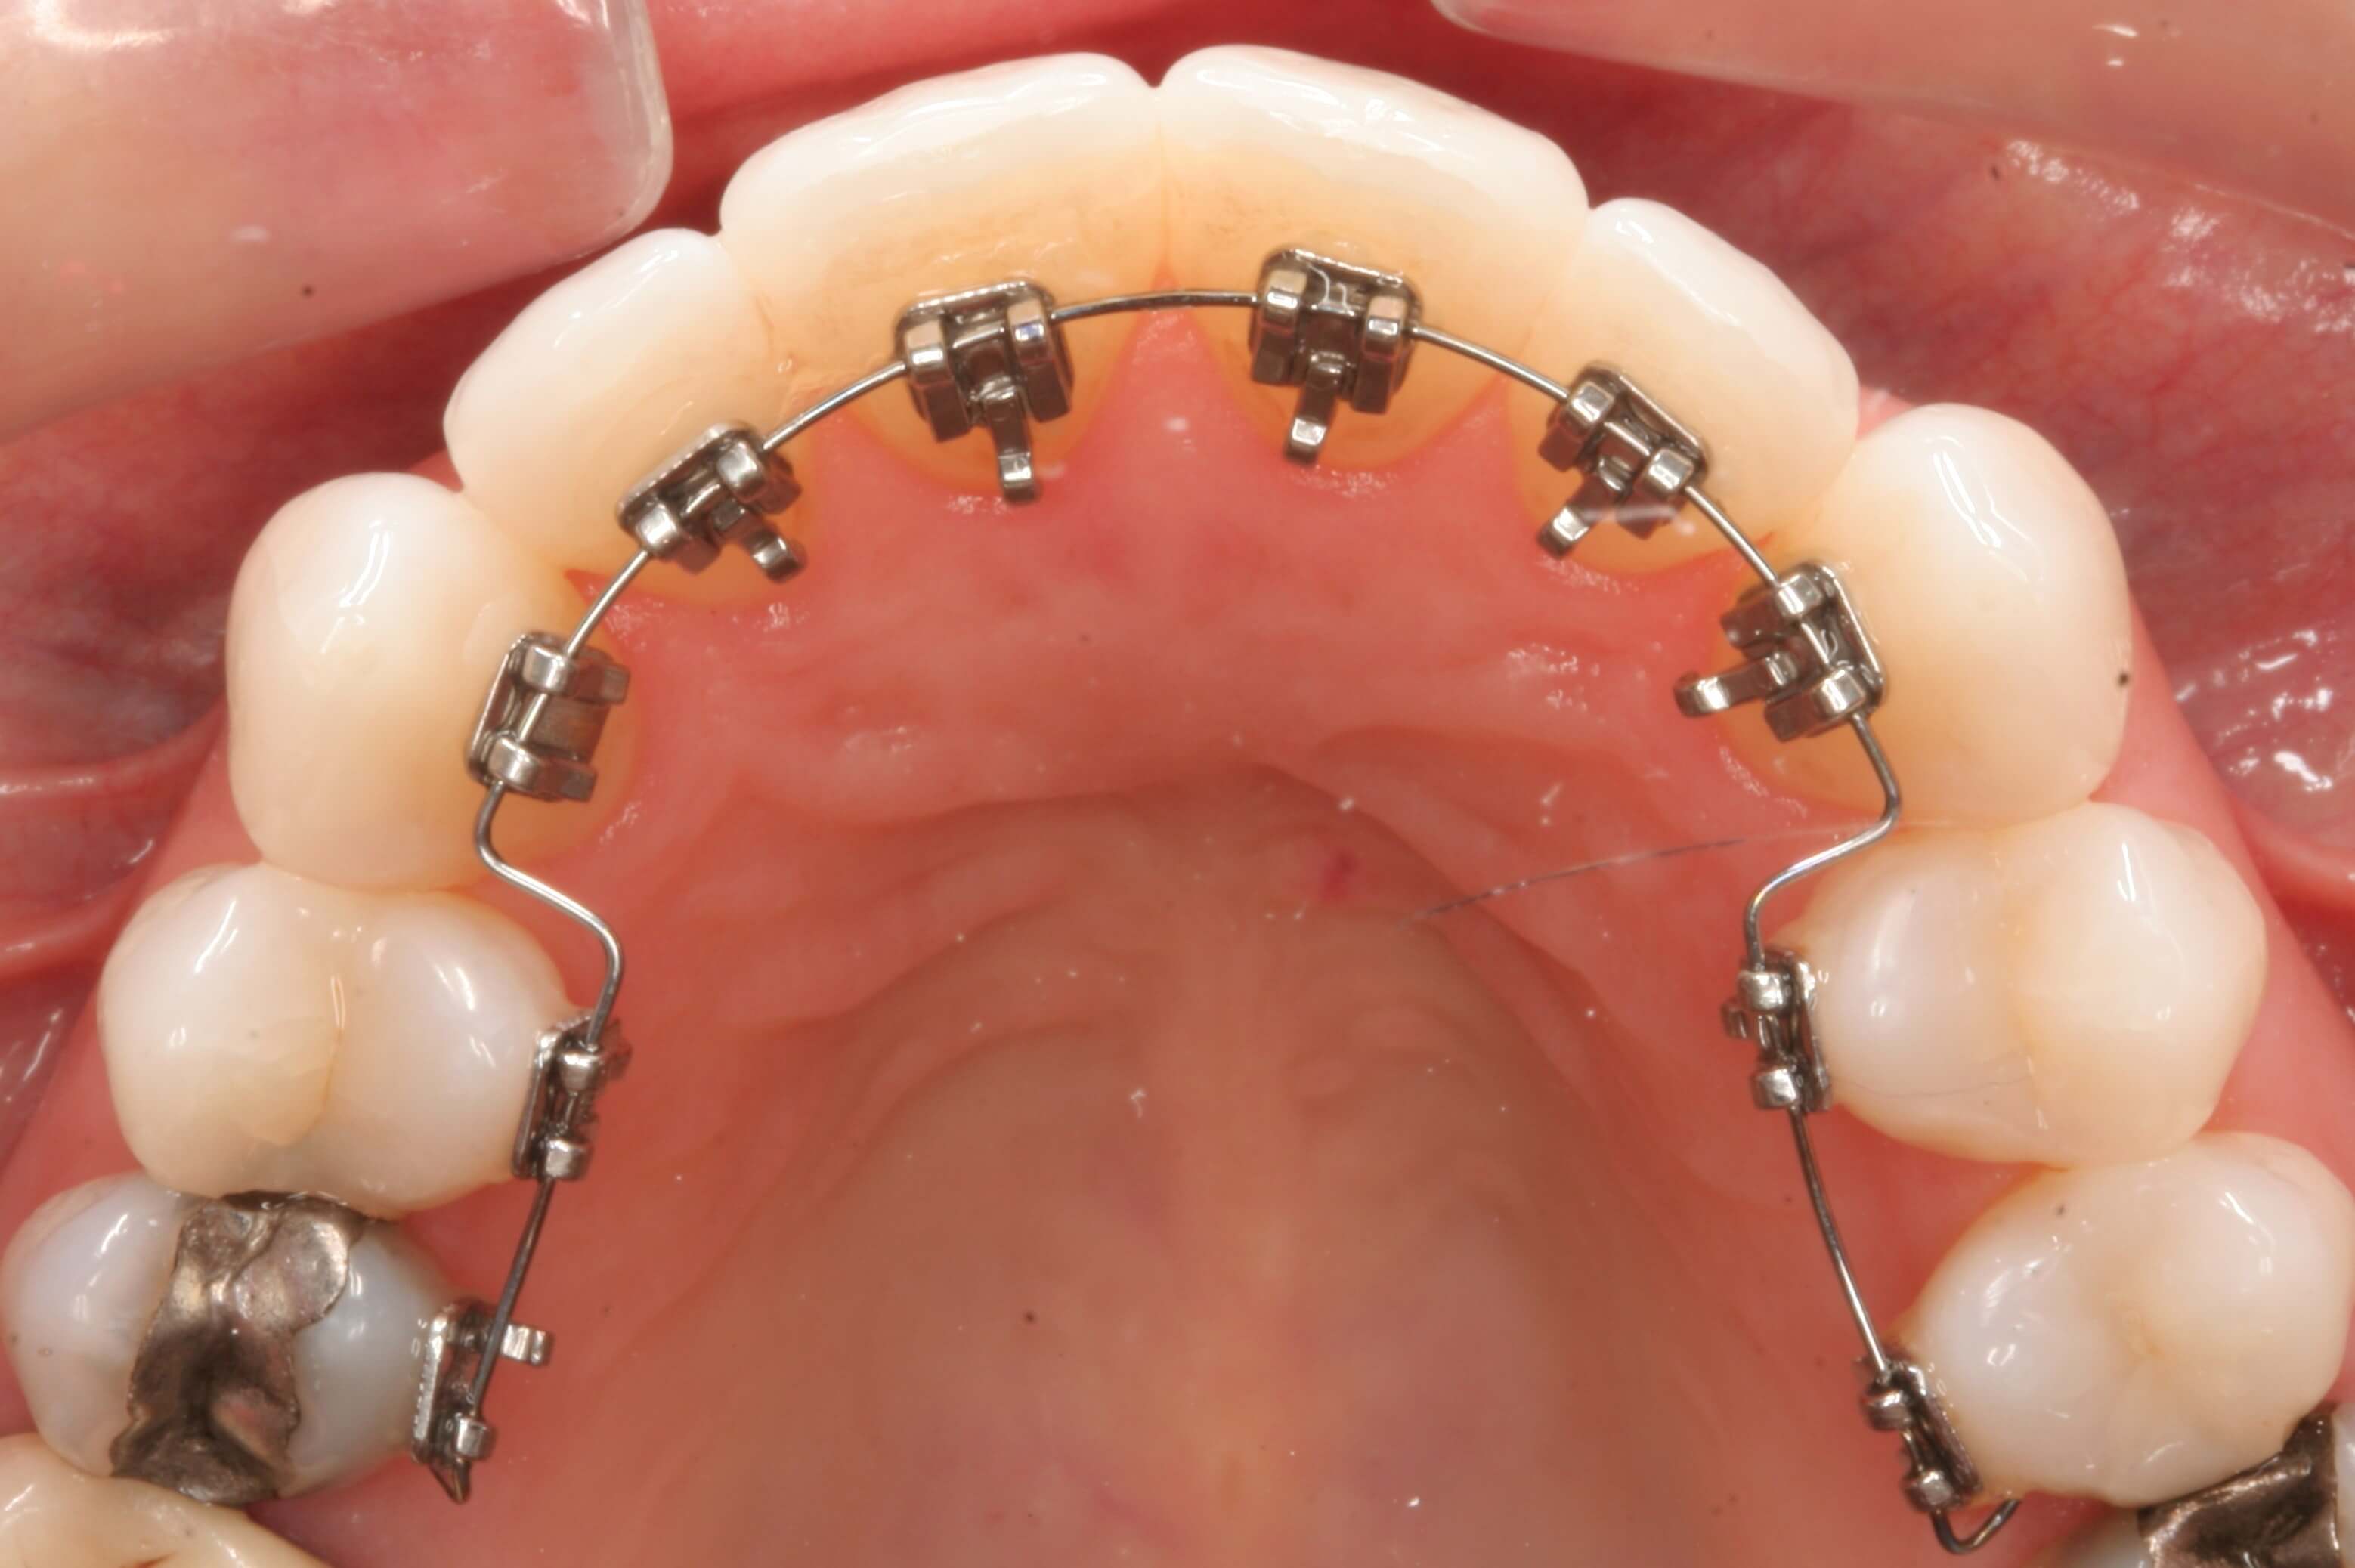 کلینیک دندانپزشکی آرکا - ارتودنسی نامرئی (لینگوال)